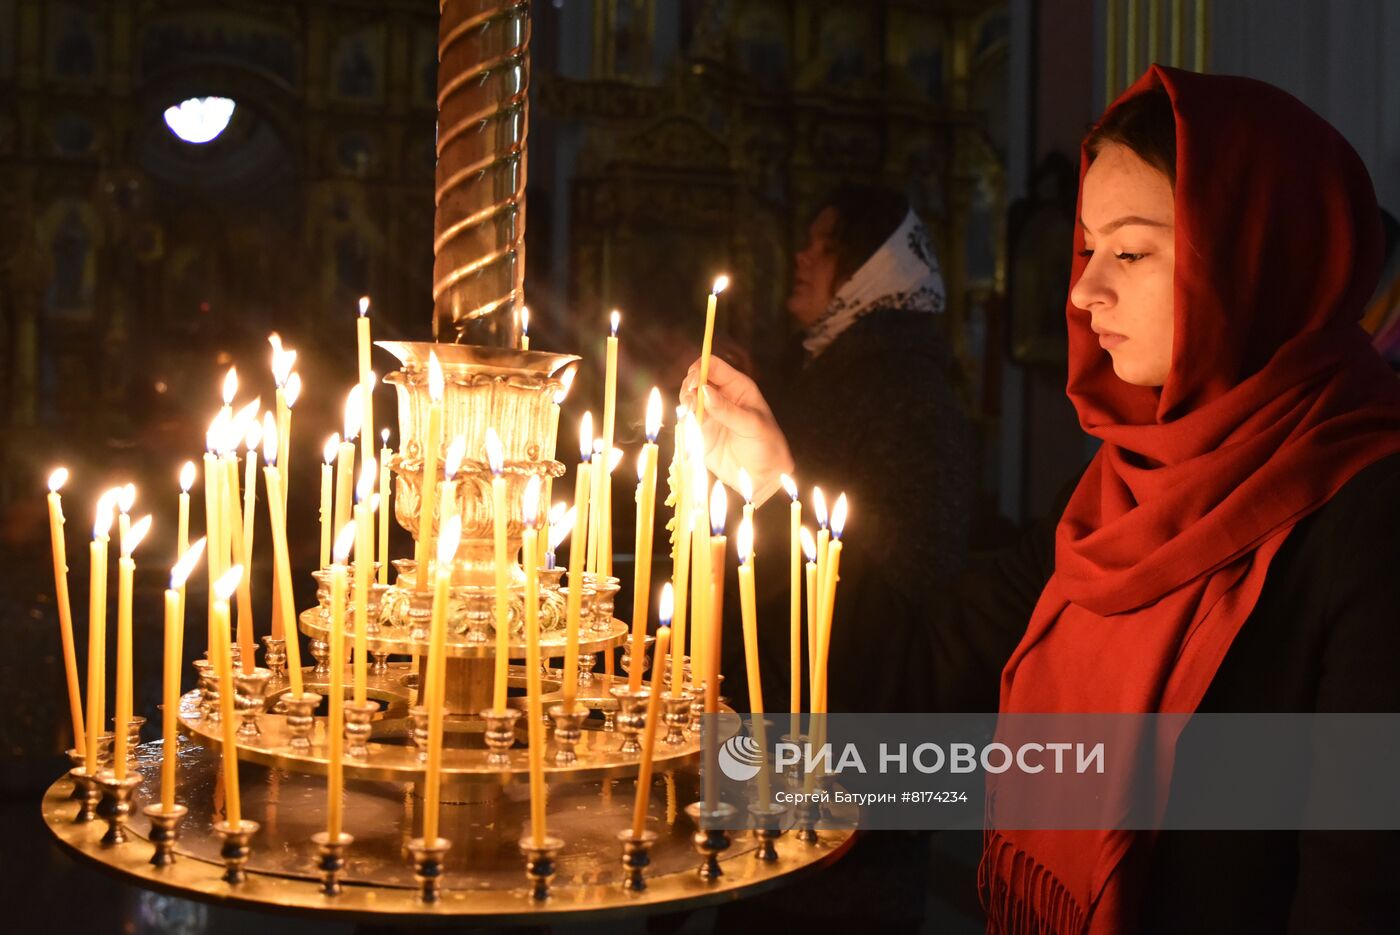 Жители Донецка празднуют Пасху